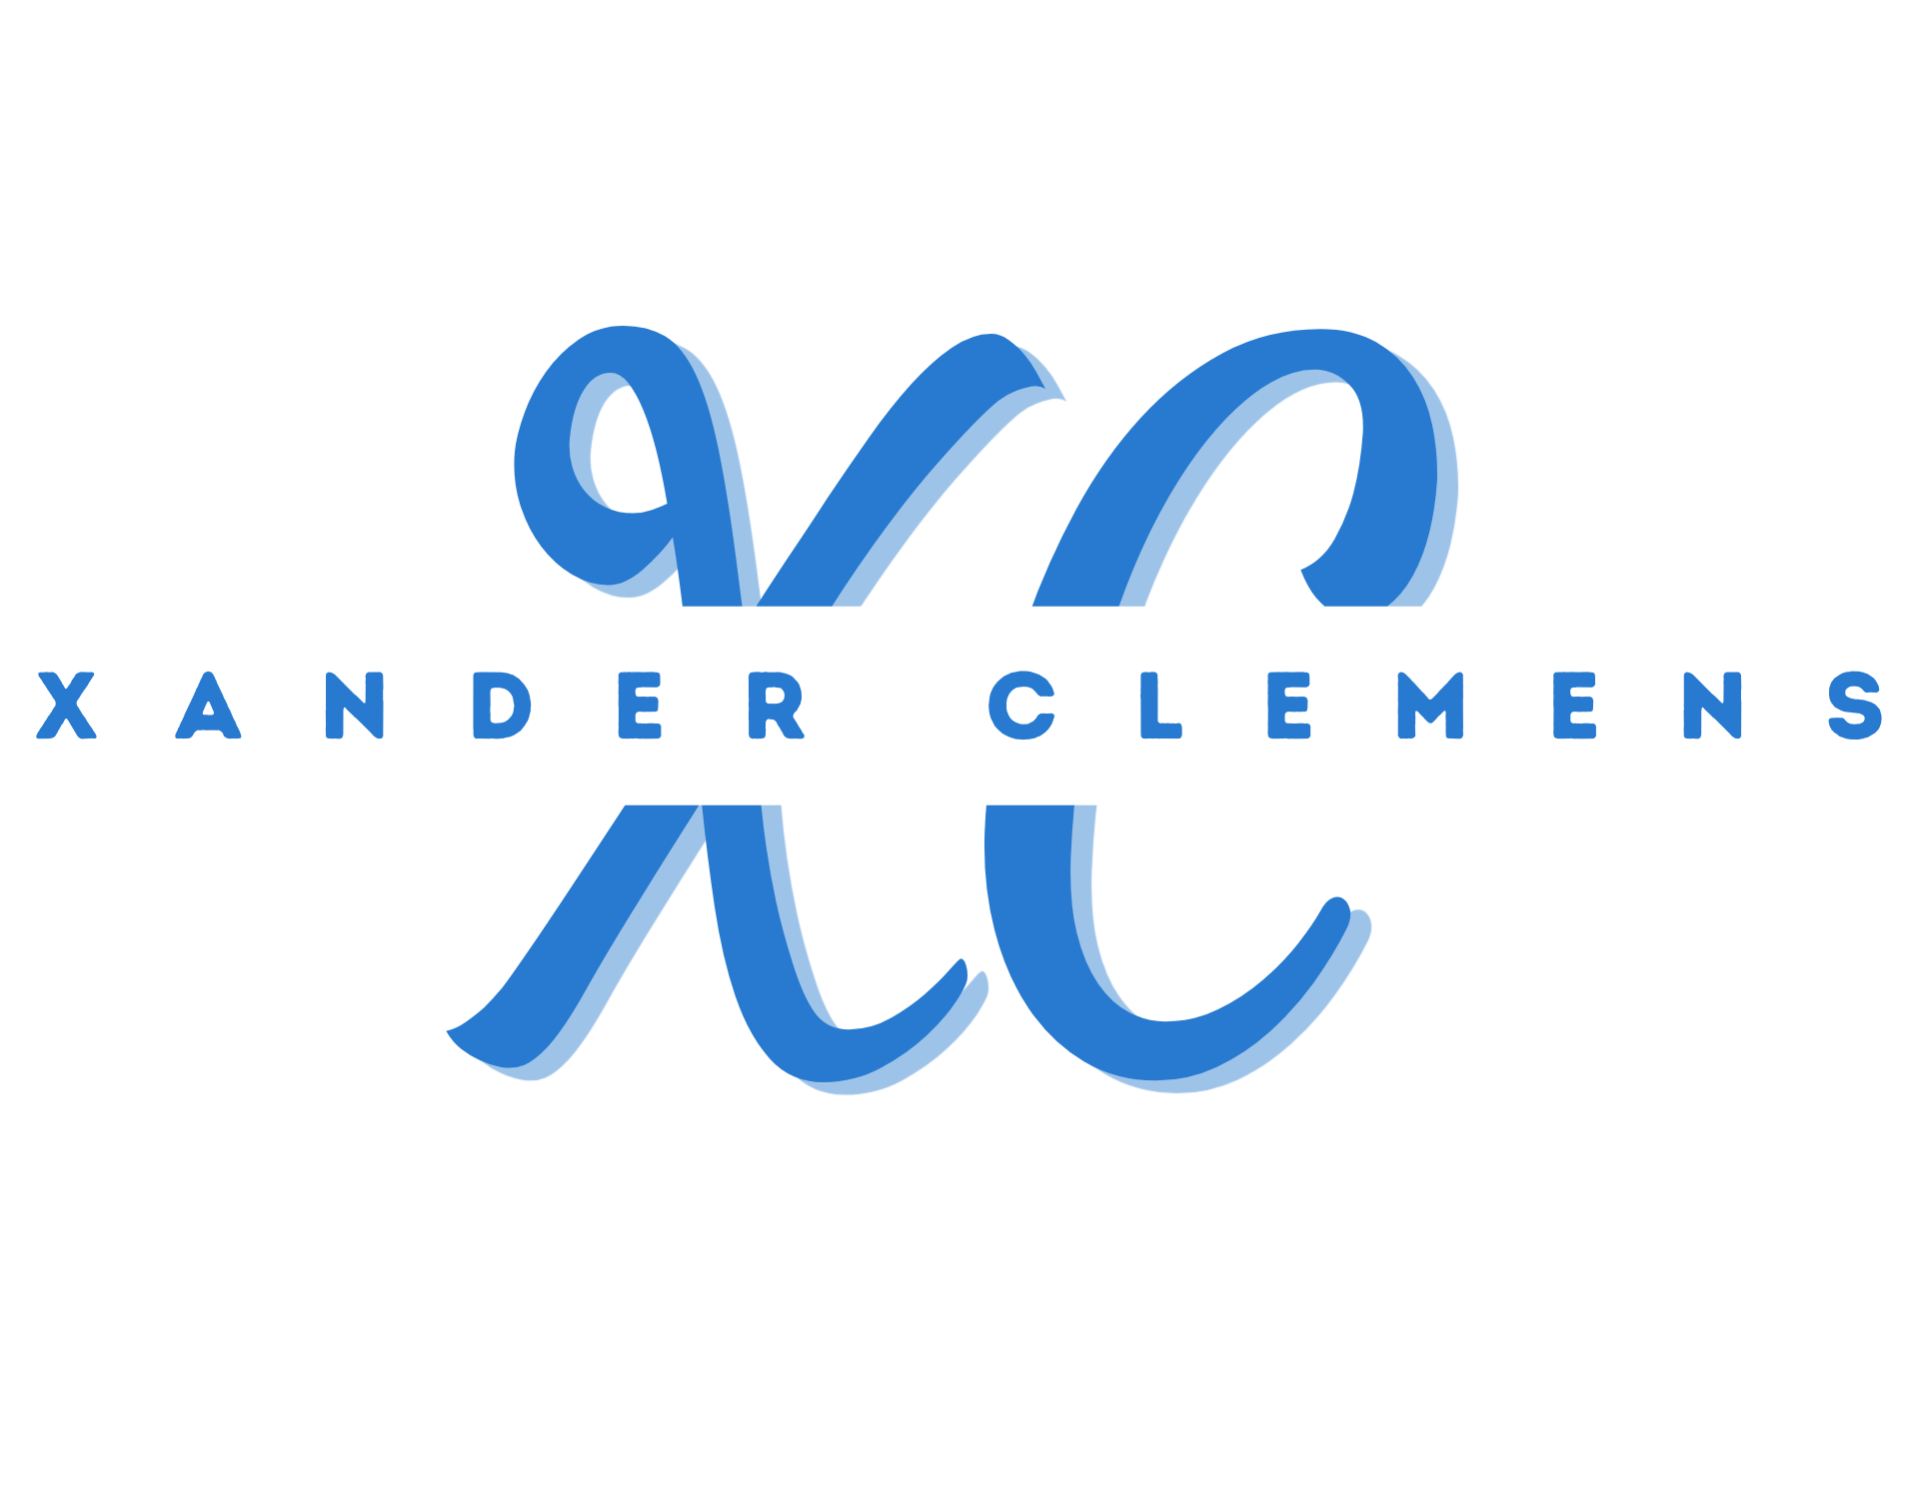 Xander Clemens logo. 